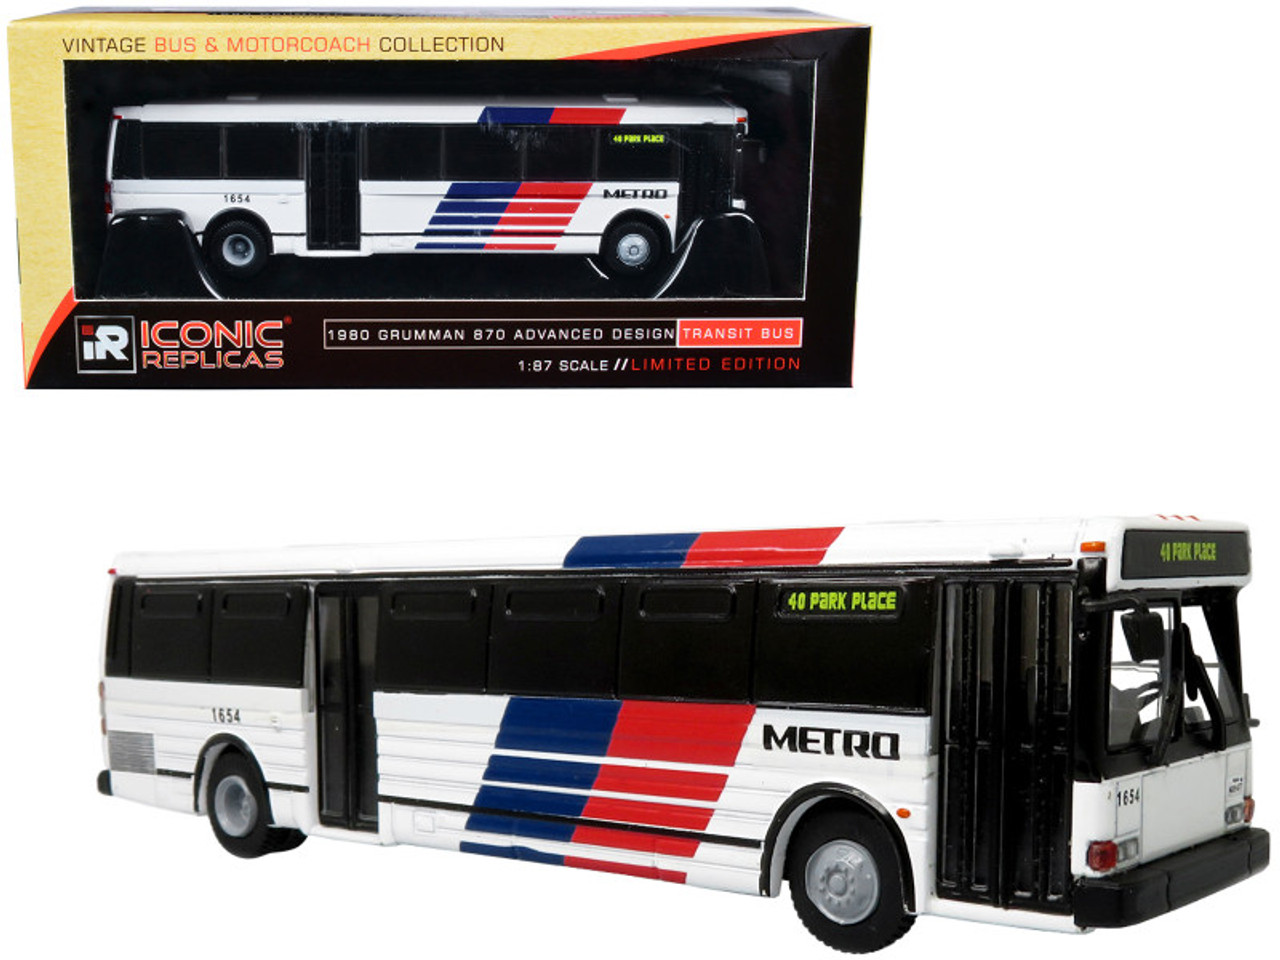 1980 Grumman 870 Advanced Design Transit Bus Metro Houston "40 Park Place" "Vintage Bus & Motorcoach Collection" 1/87 Diecast Model by Iconic Replicas